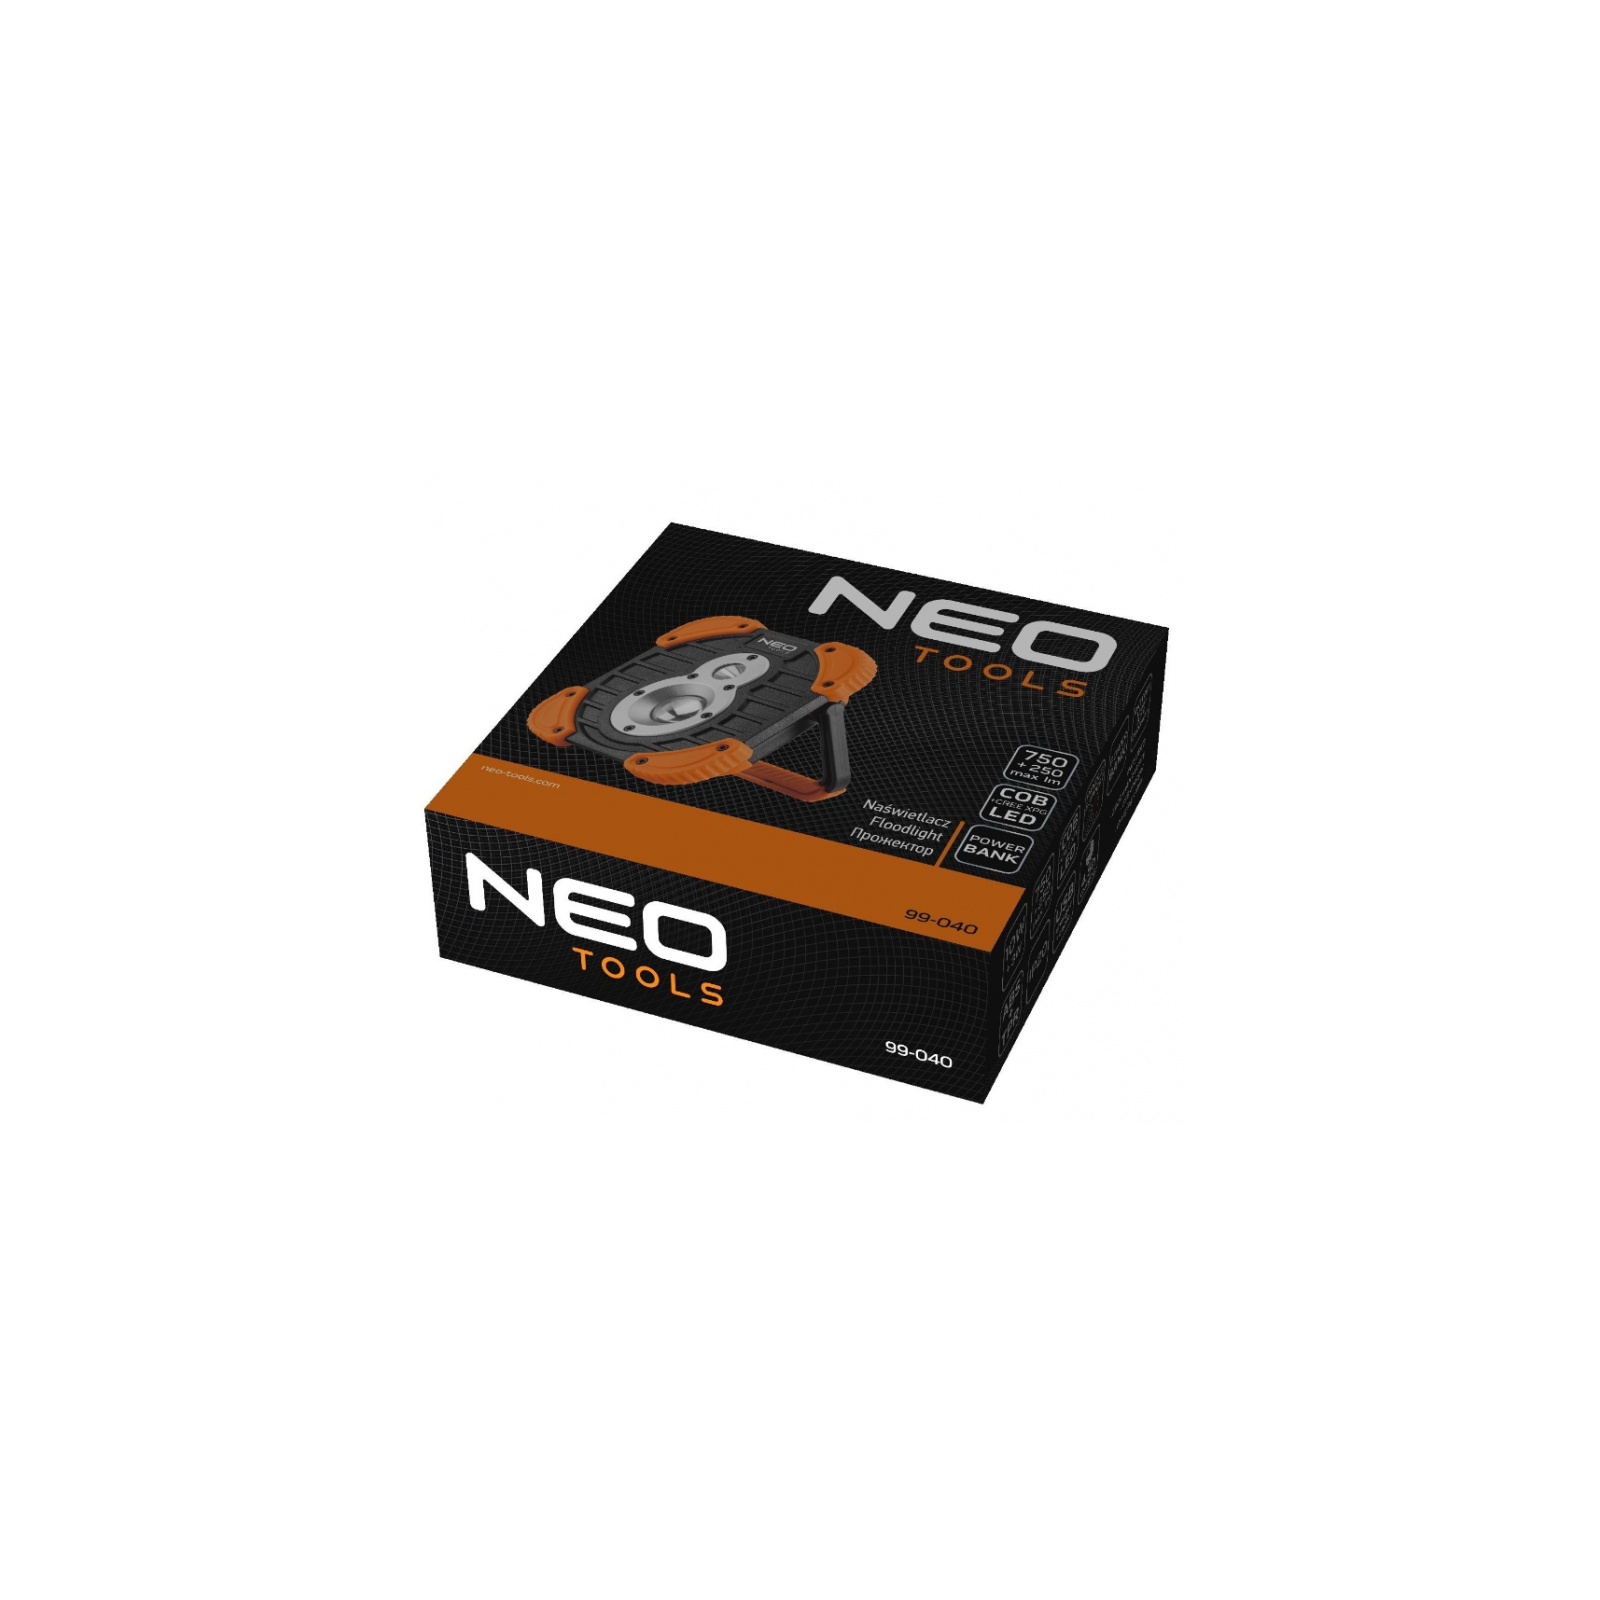 Прожектор Neo Tools аккумулятор, 2600мАч, 3.7 Li-ion, 10 Вт + 3 Вт, 750+ 250 люм (99-040) изображение 4